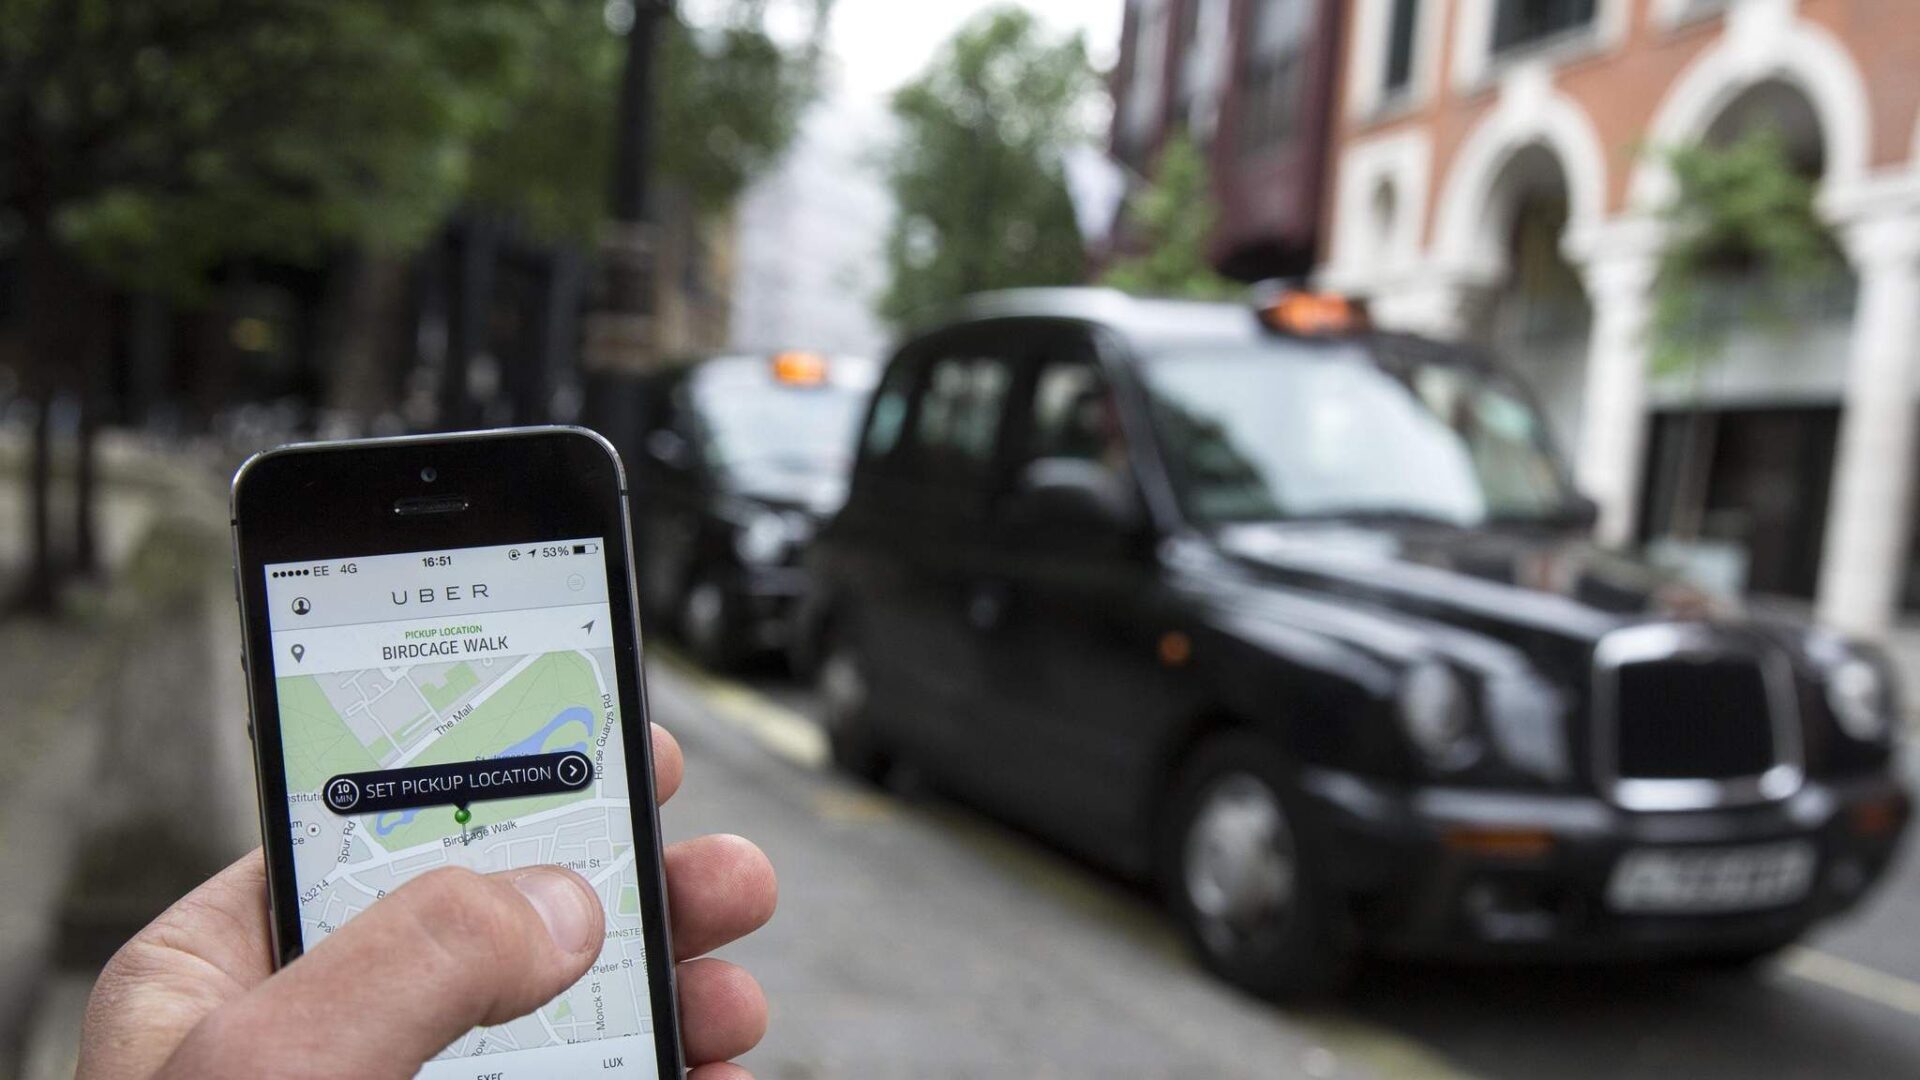 Uber's black cabs in London; Photo Credit: Uber